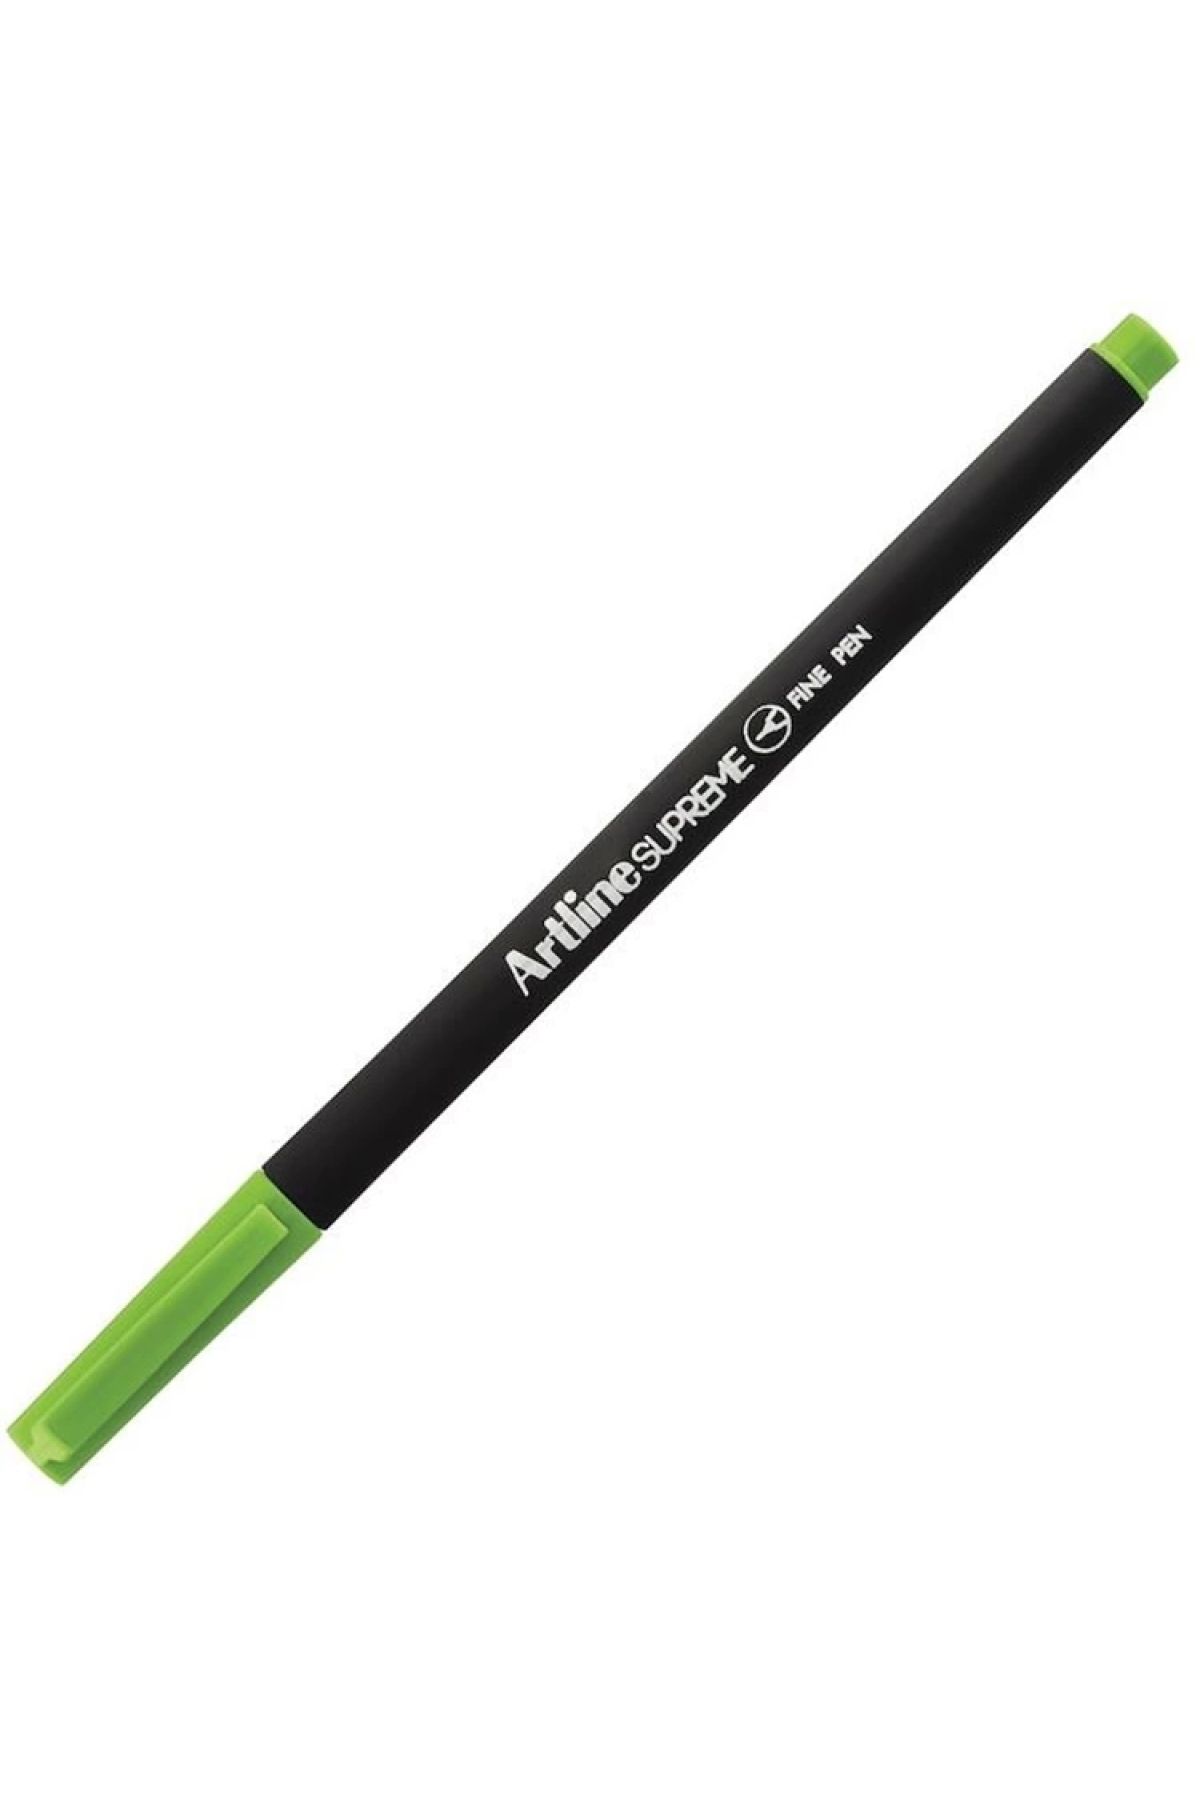 artline Artlıne Supreme Epfs-200 Fıne Pen Yellow Green